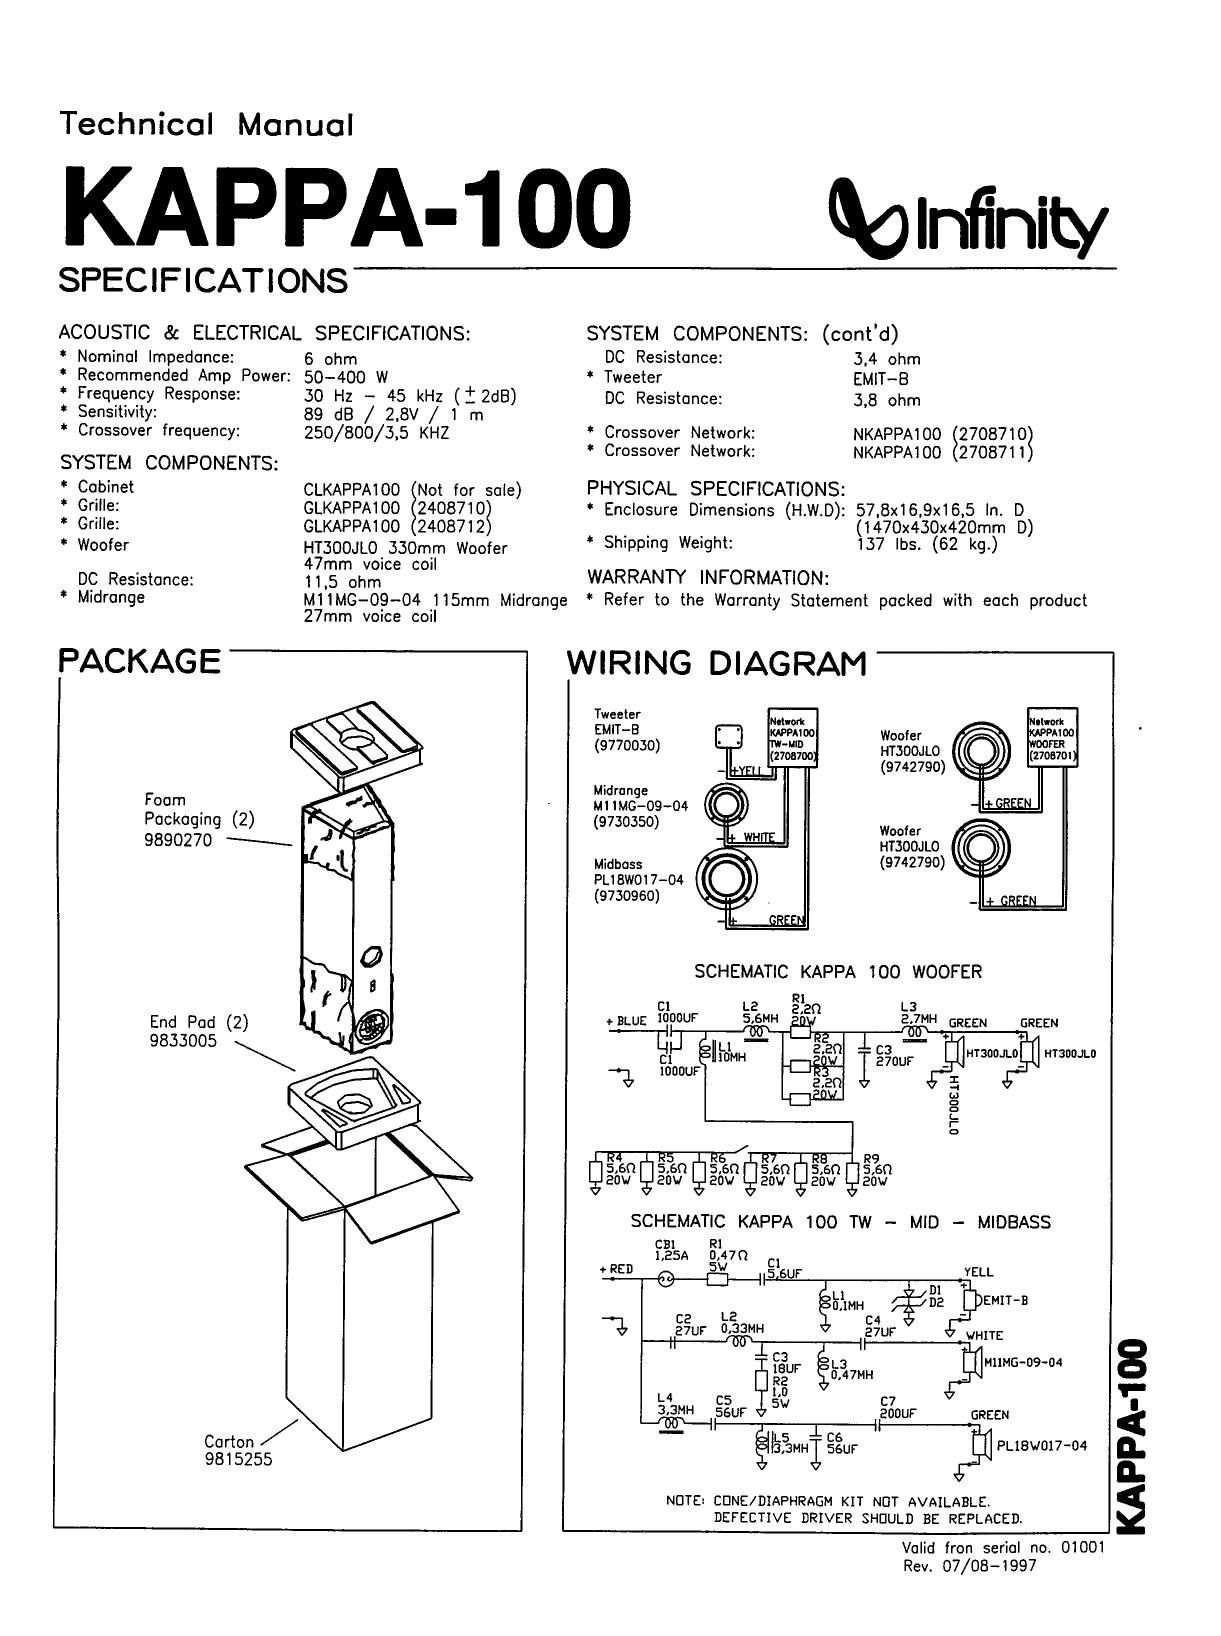 Infinity Kappa 100 Technical Manual